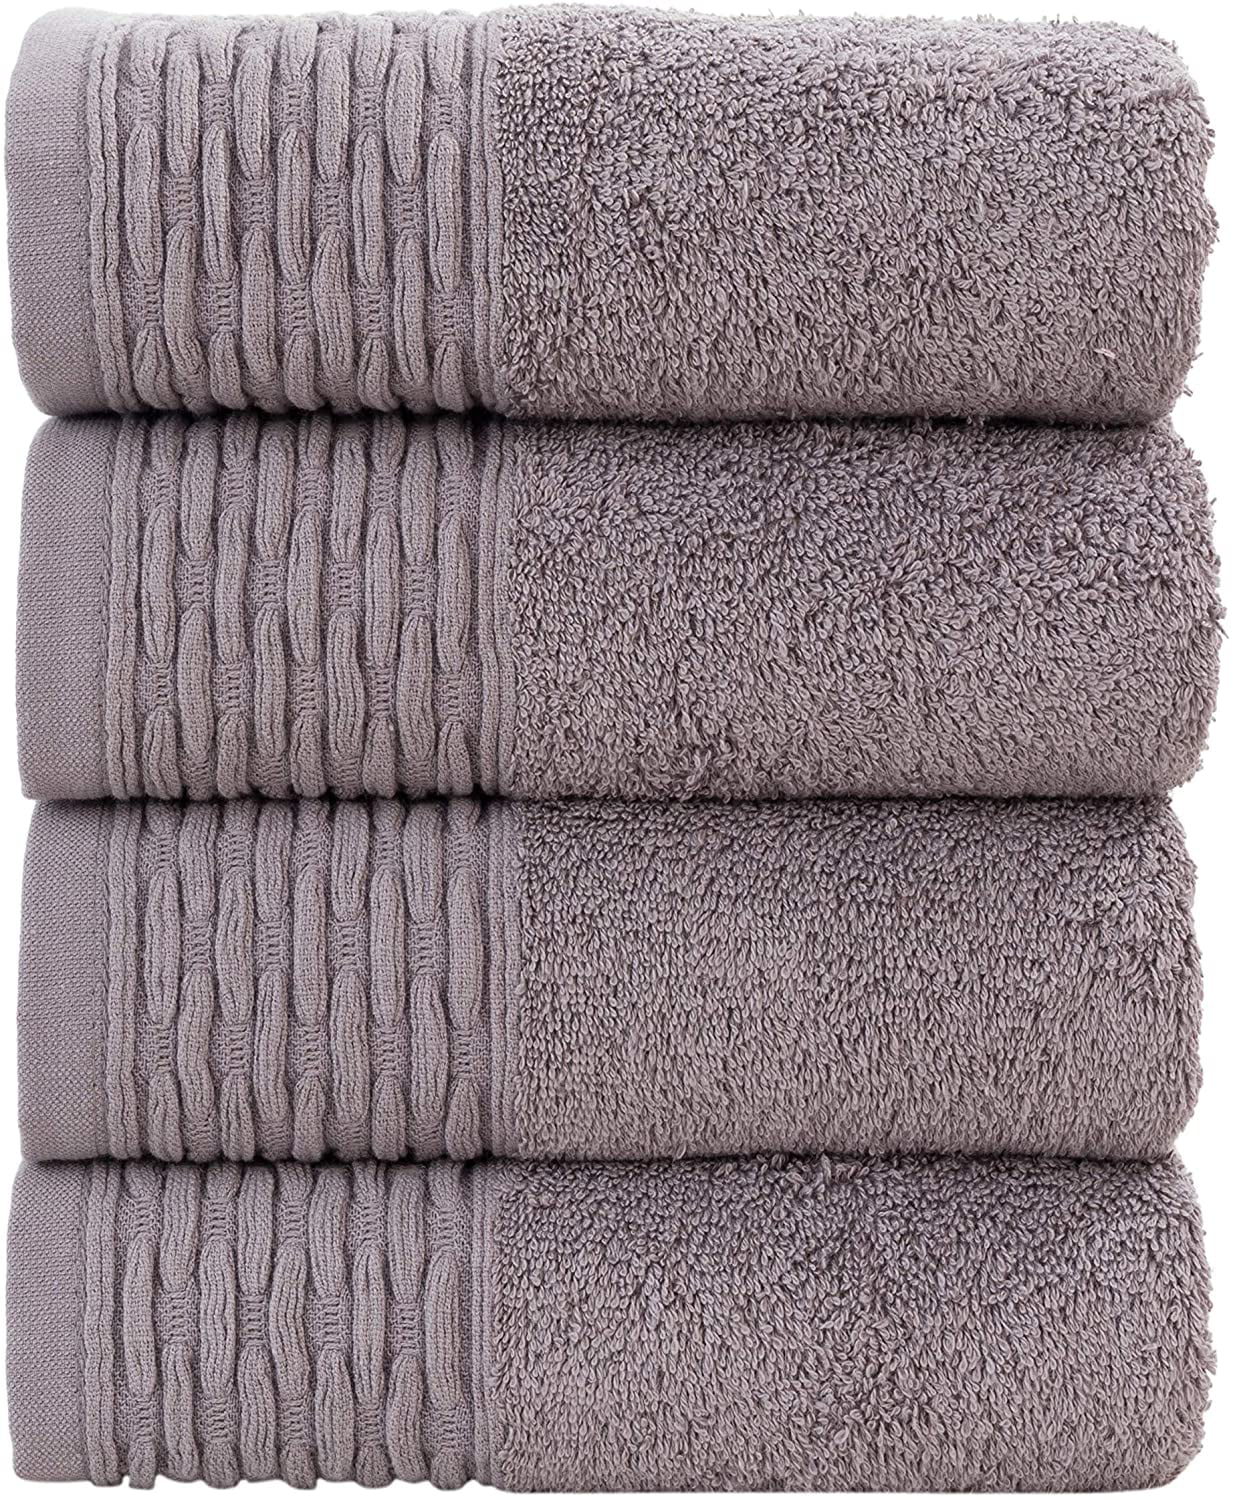 100% Cotton Towel Set 600 GSM Bath Sheet Hand Large Bale Bathroom Luxury 3 Piece 